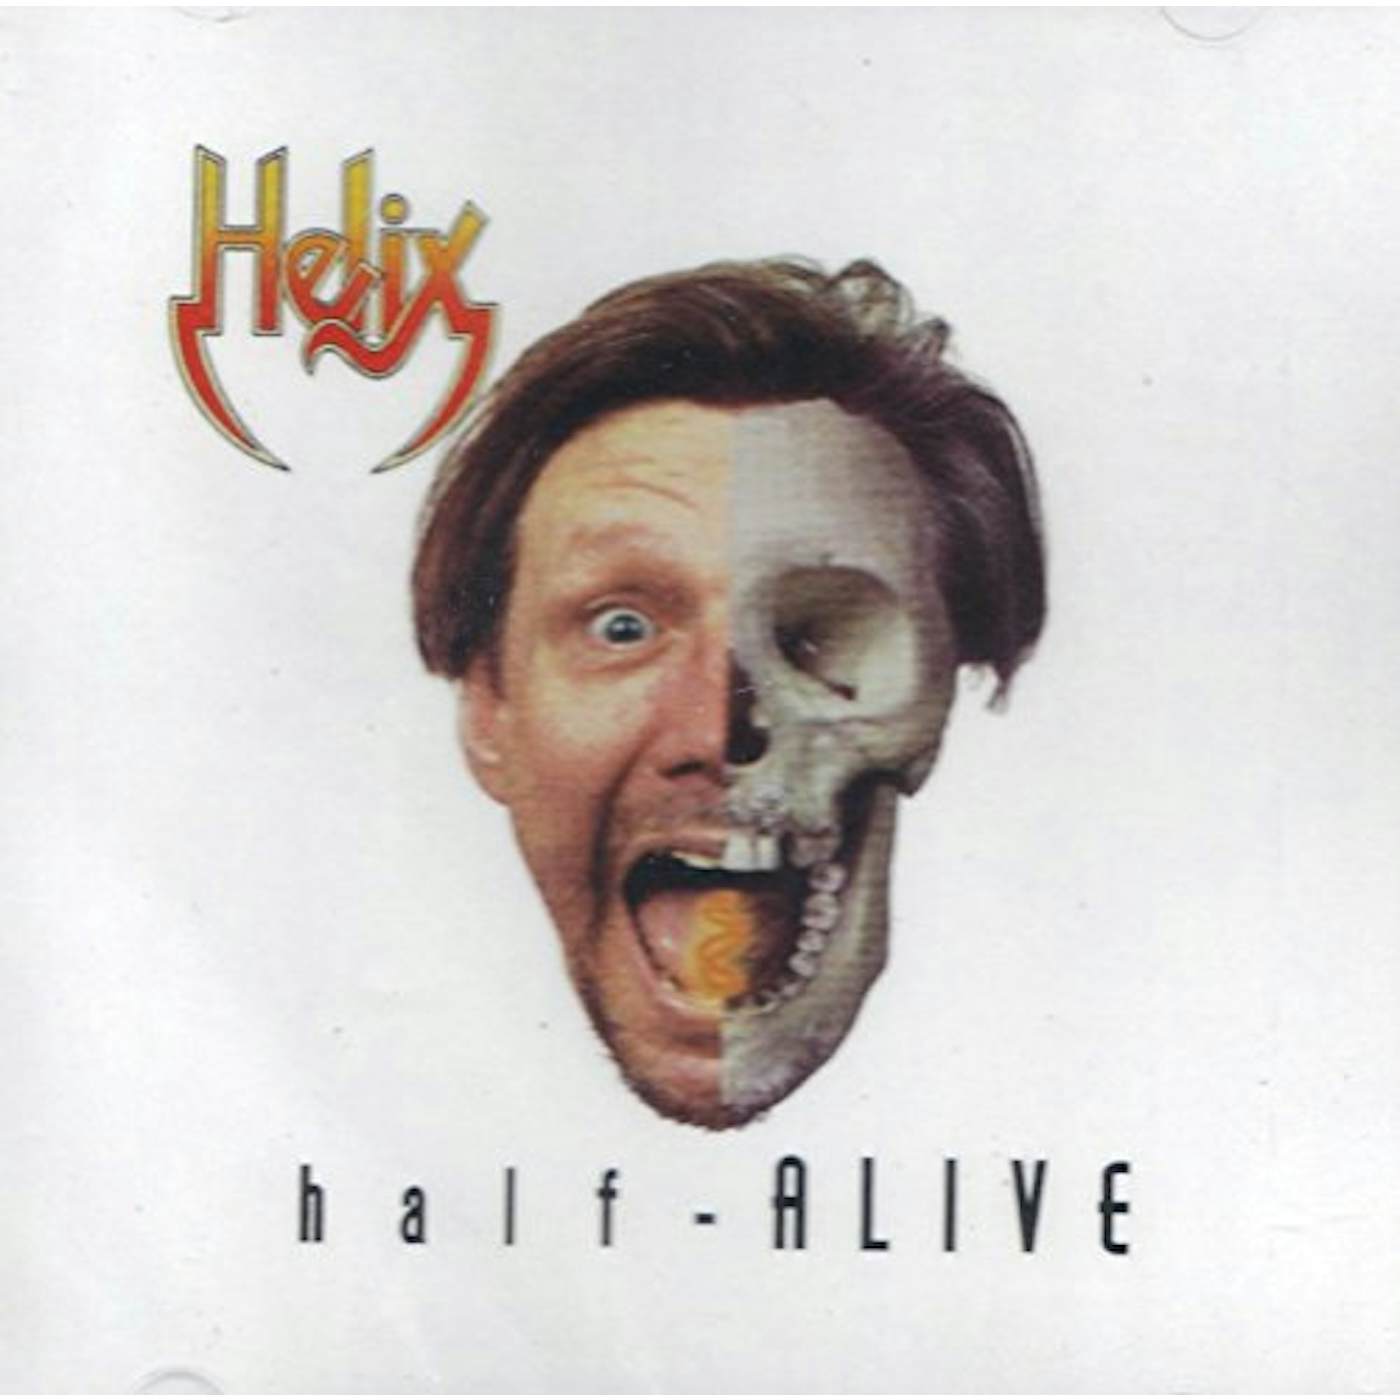 Helix HALF ALIVE CD